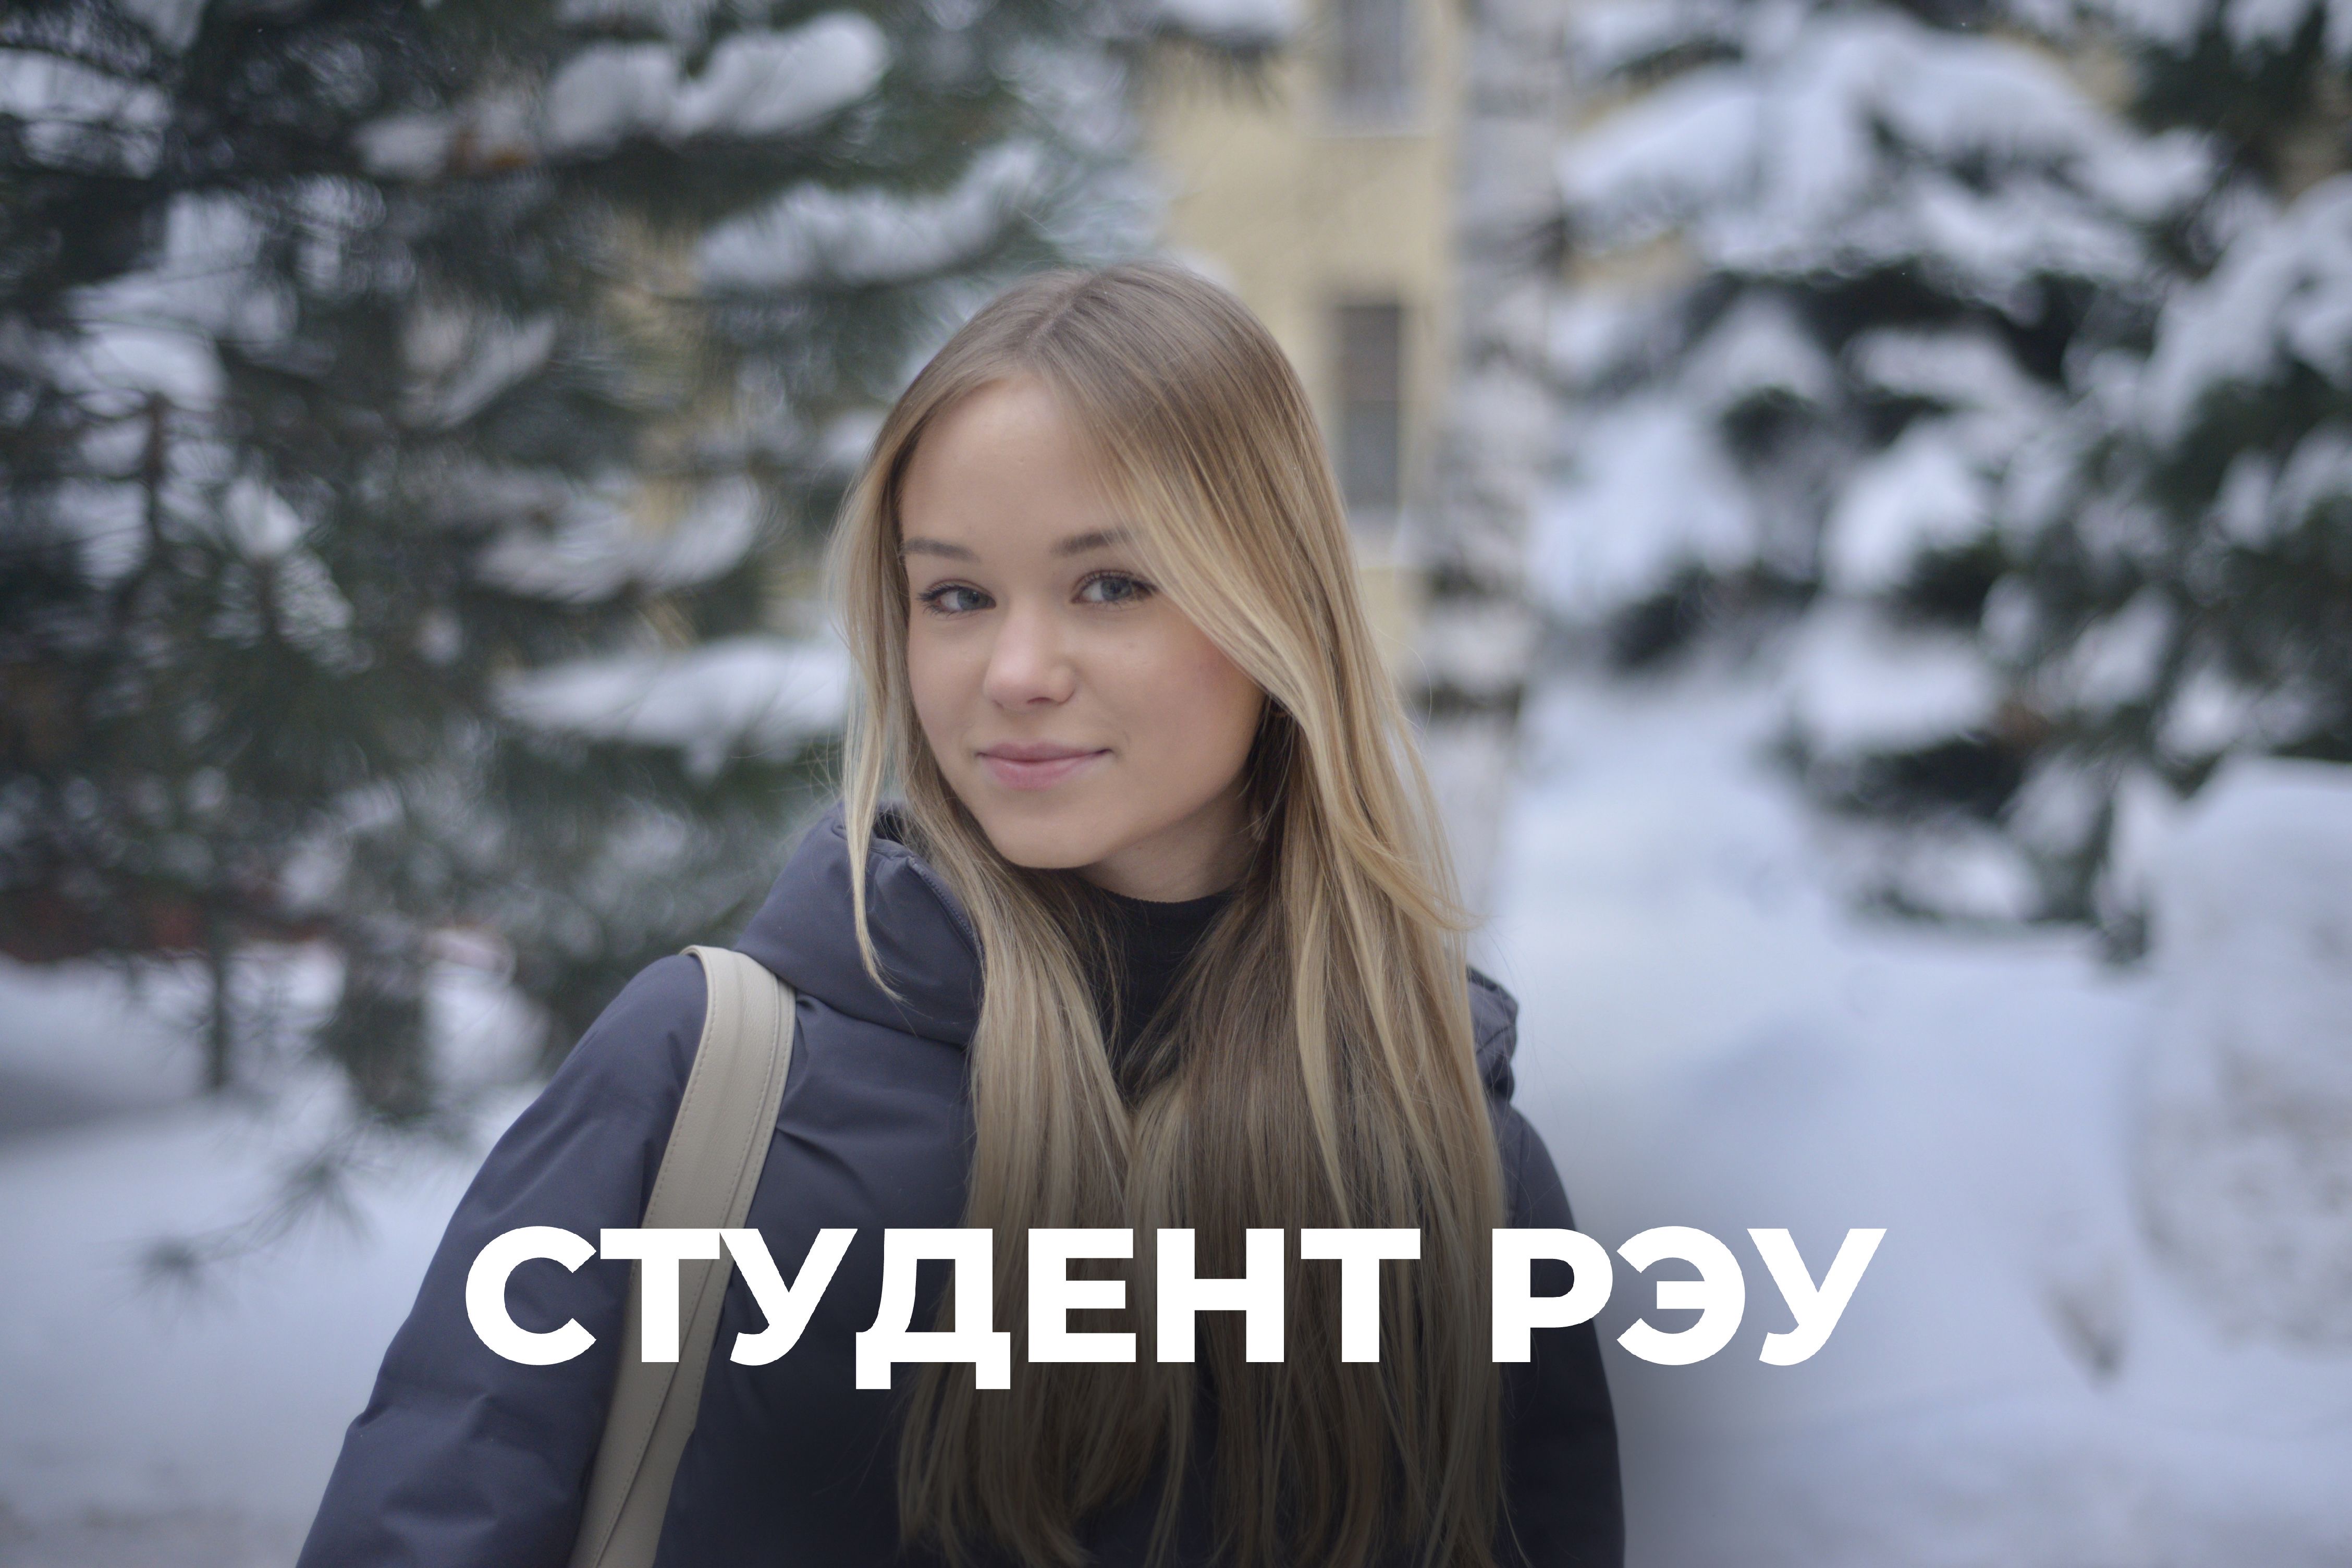 Чеснокова Анастасия - Студентка РЭУ им. Г. В. Плеханова